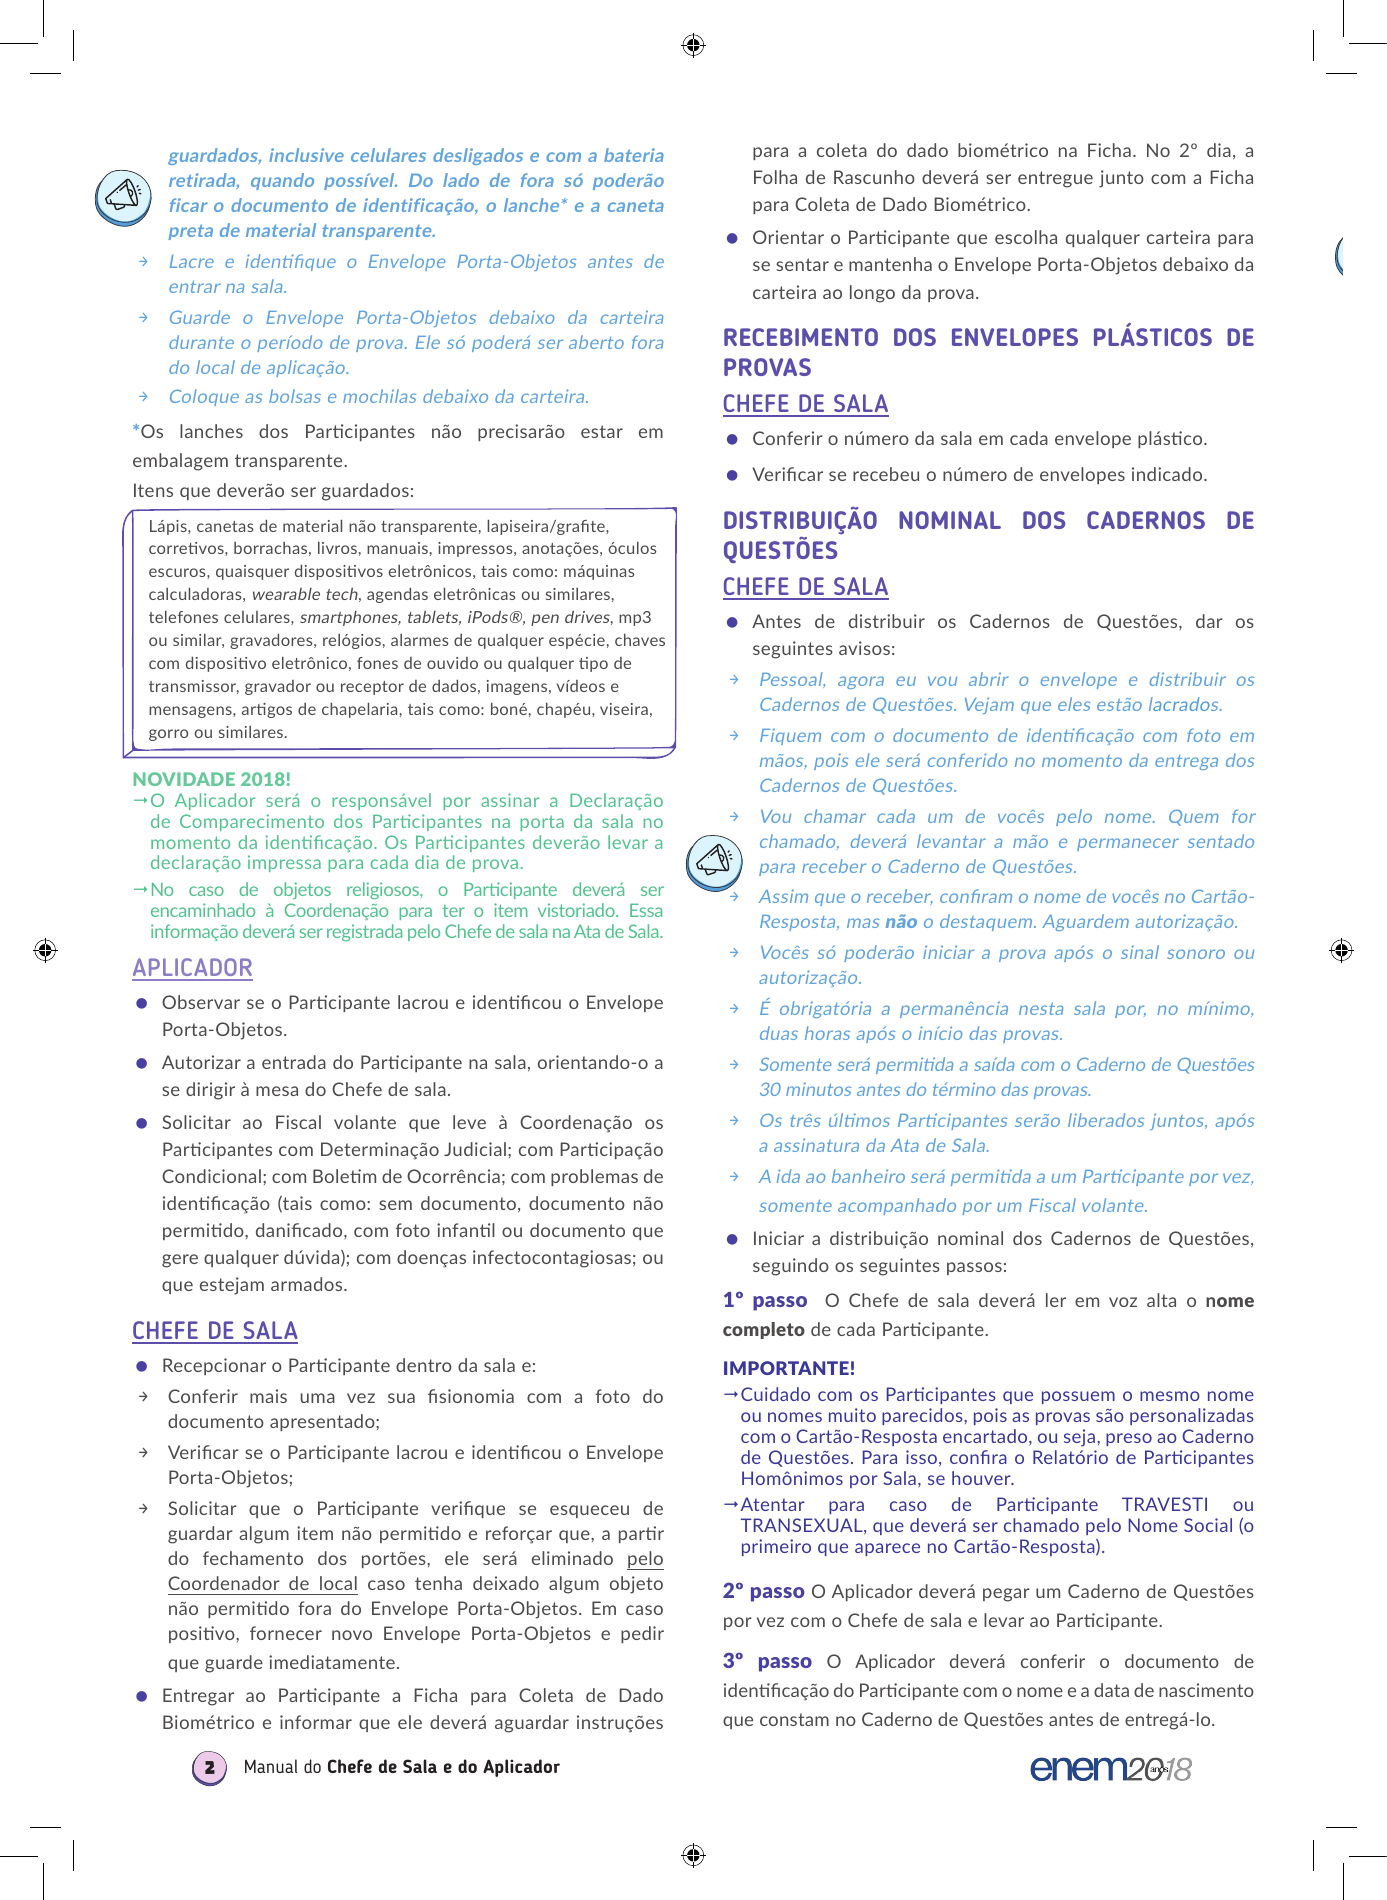 Page 2 of 4 - Manual CHEFE DE SALA